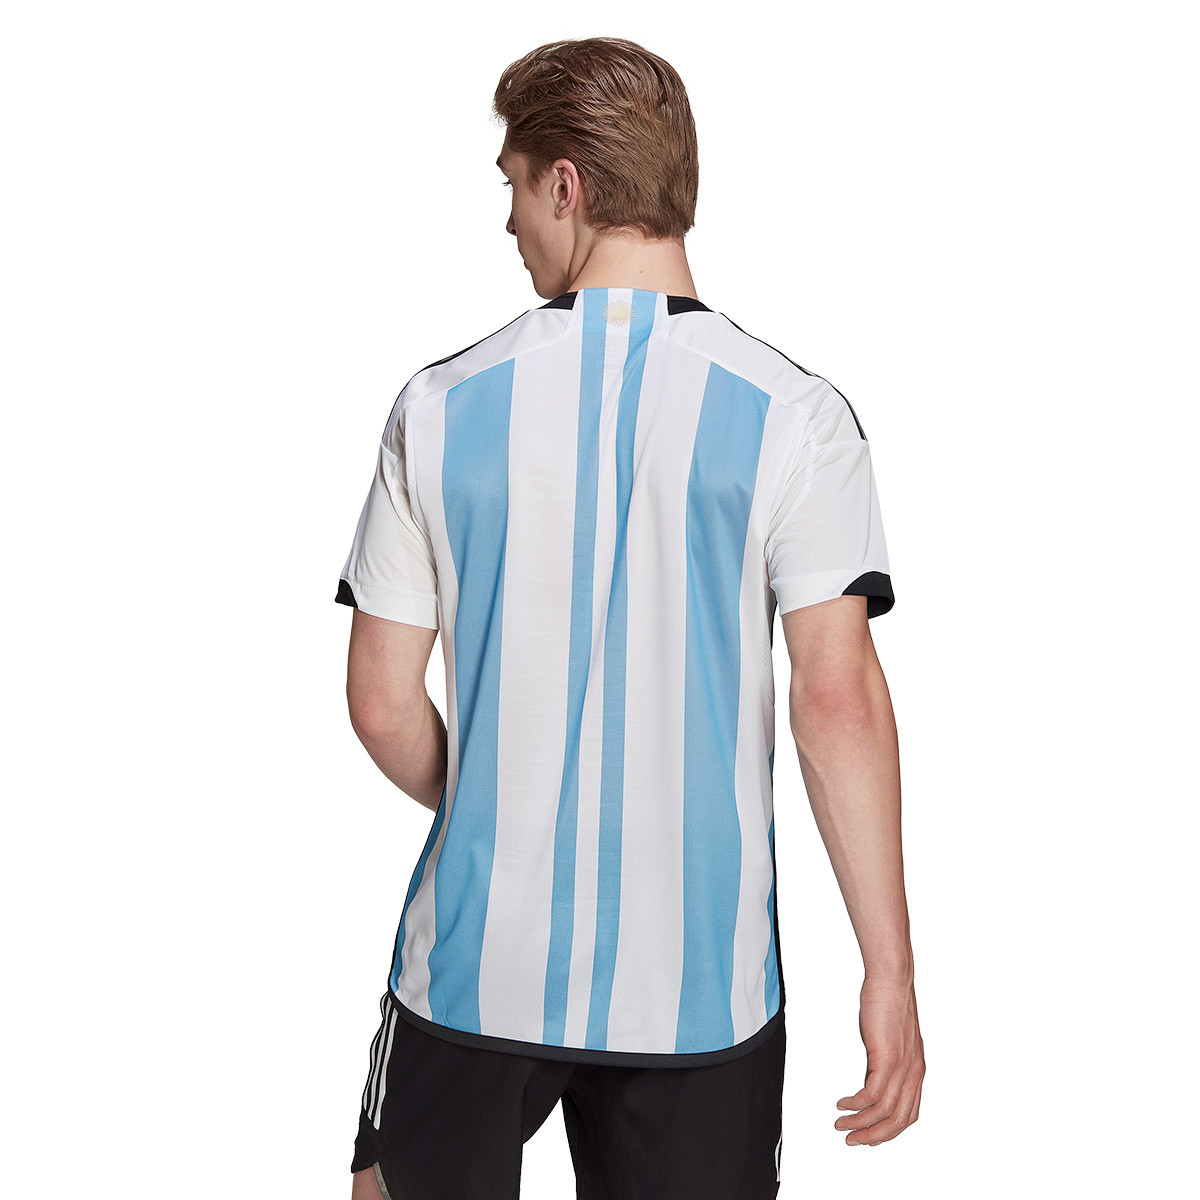 adidas Argentina Gym Sack World Cup 2022 - White/Blue - Soccer